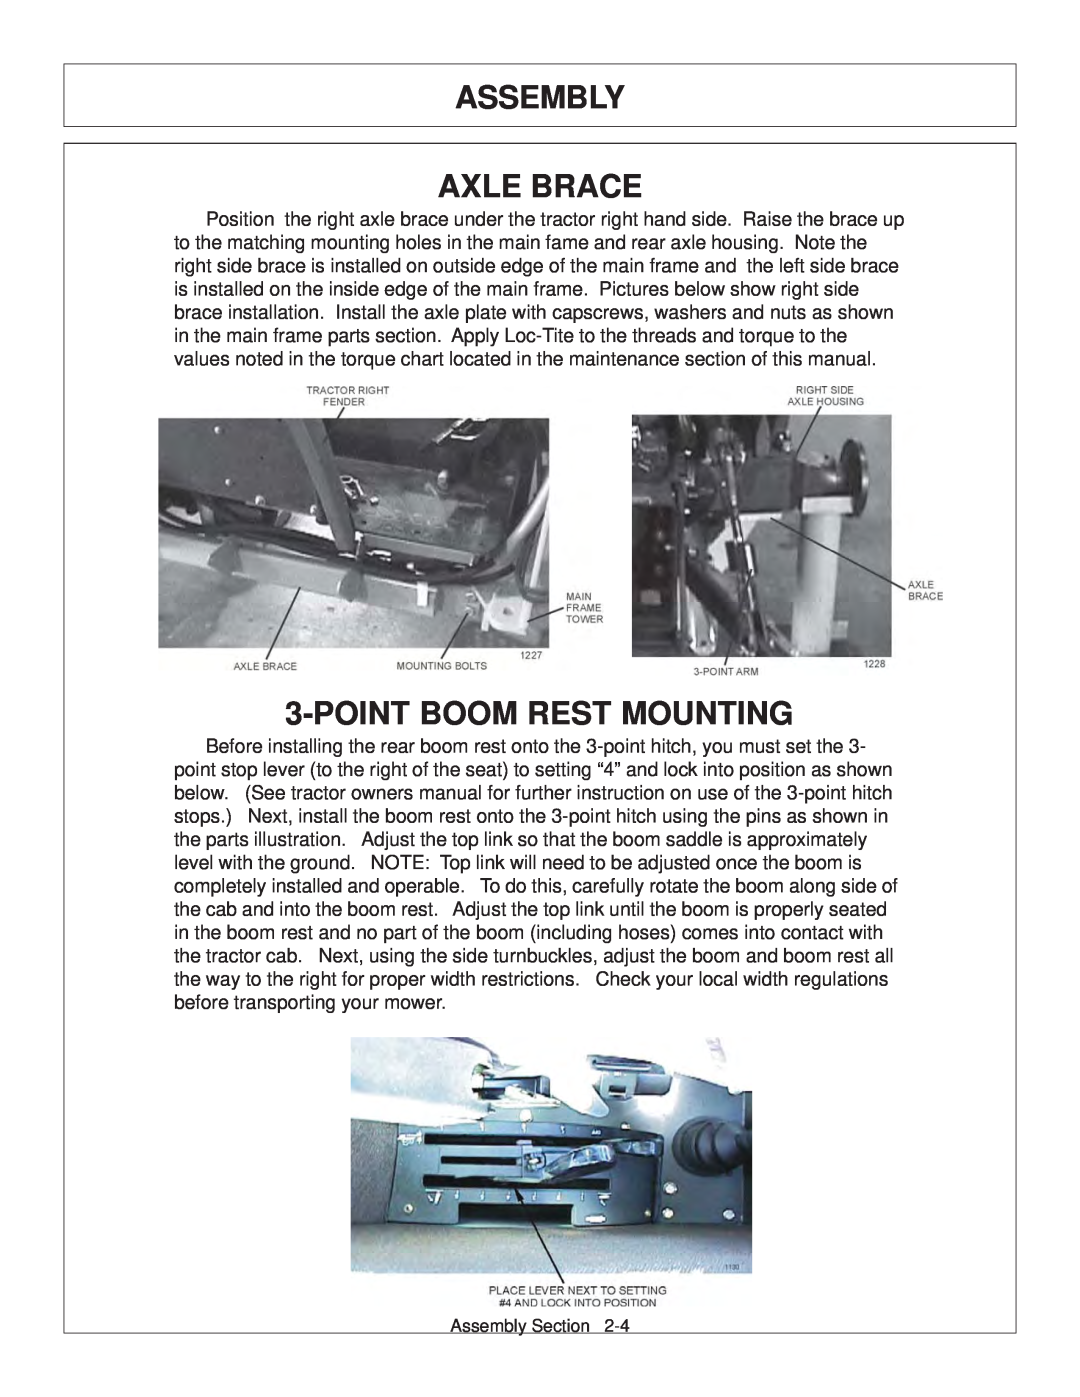 Tiger Products Co., Ltd JD 5093E, JD 5101E, JD 5083E manual Assembly Axle Brace, Point Boom Rest Mounting 